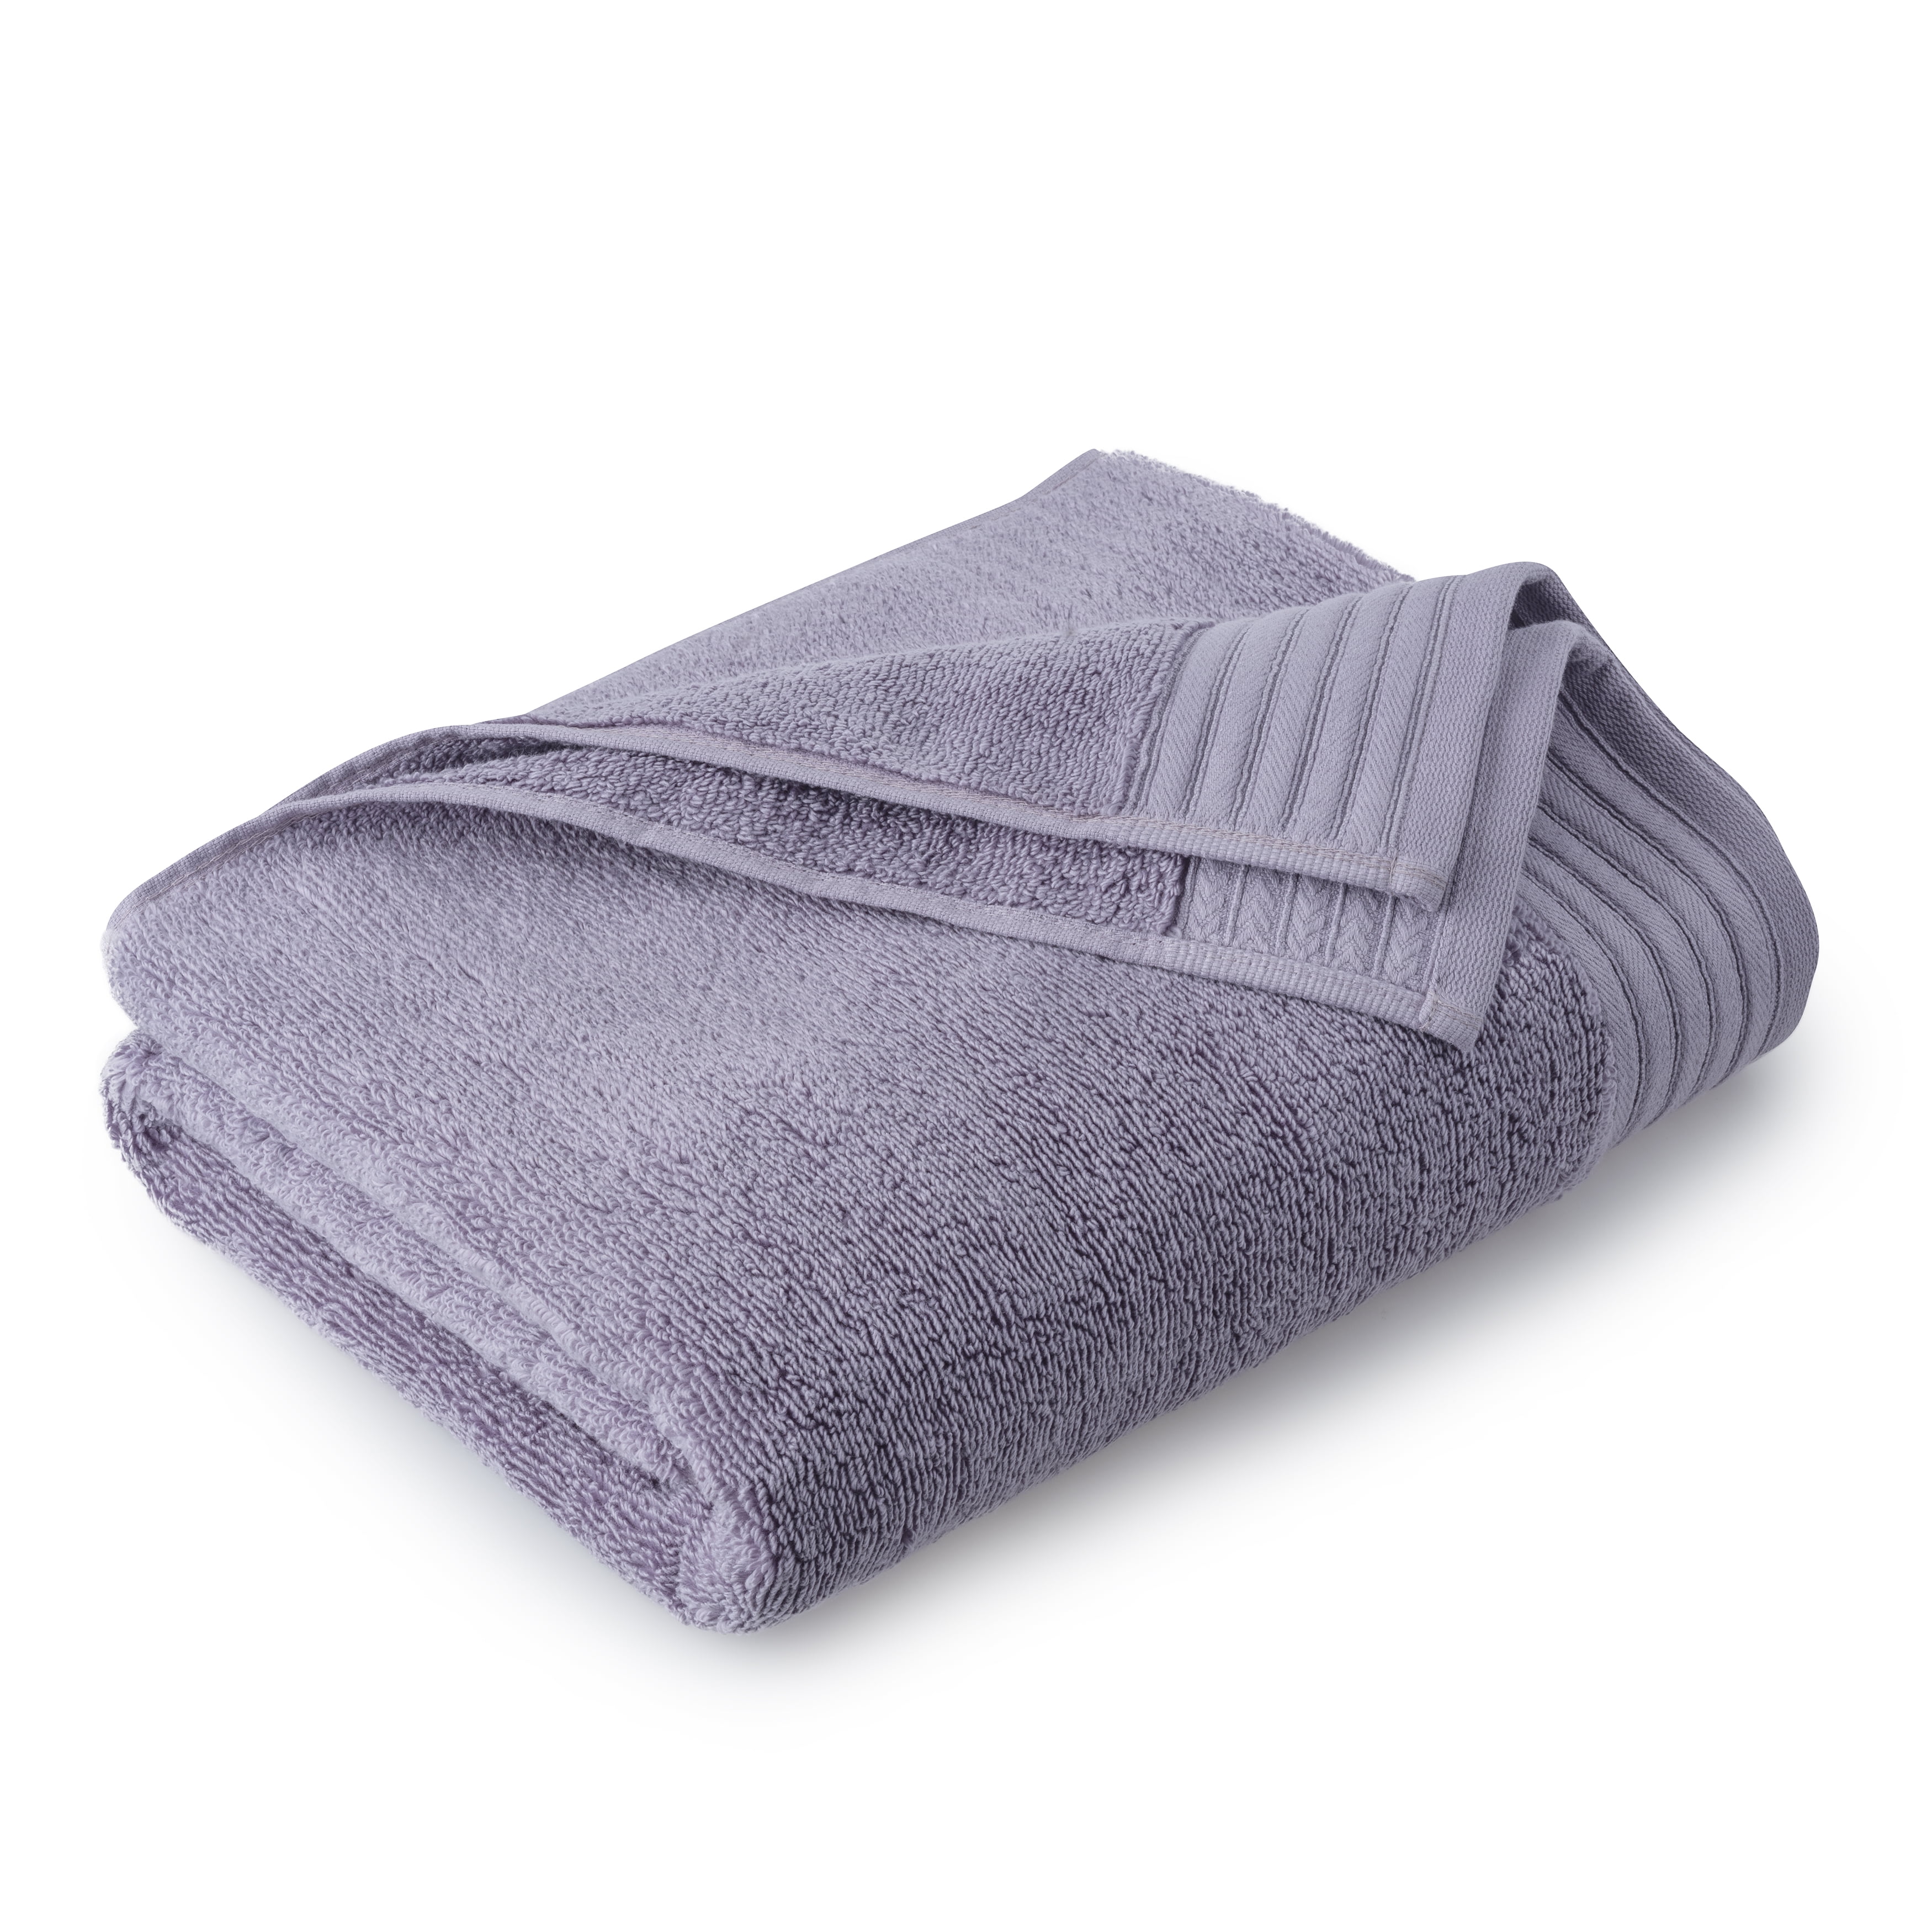  COZYART Lavender Luxury Bath Towels Set, Cotton Hotel Large  Bath Towels Bulk for Bathroom, Thick Bathroom Towels Set of 6 with 2 Bath  Towels, 2 Hand Towels, 2 Washcloths, 650 GSM : Home & Kitchen